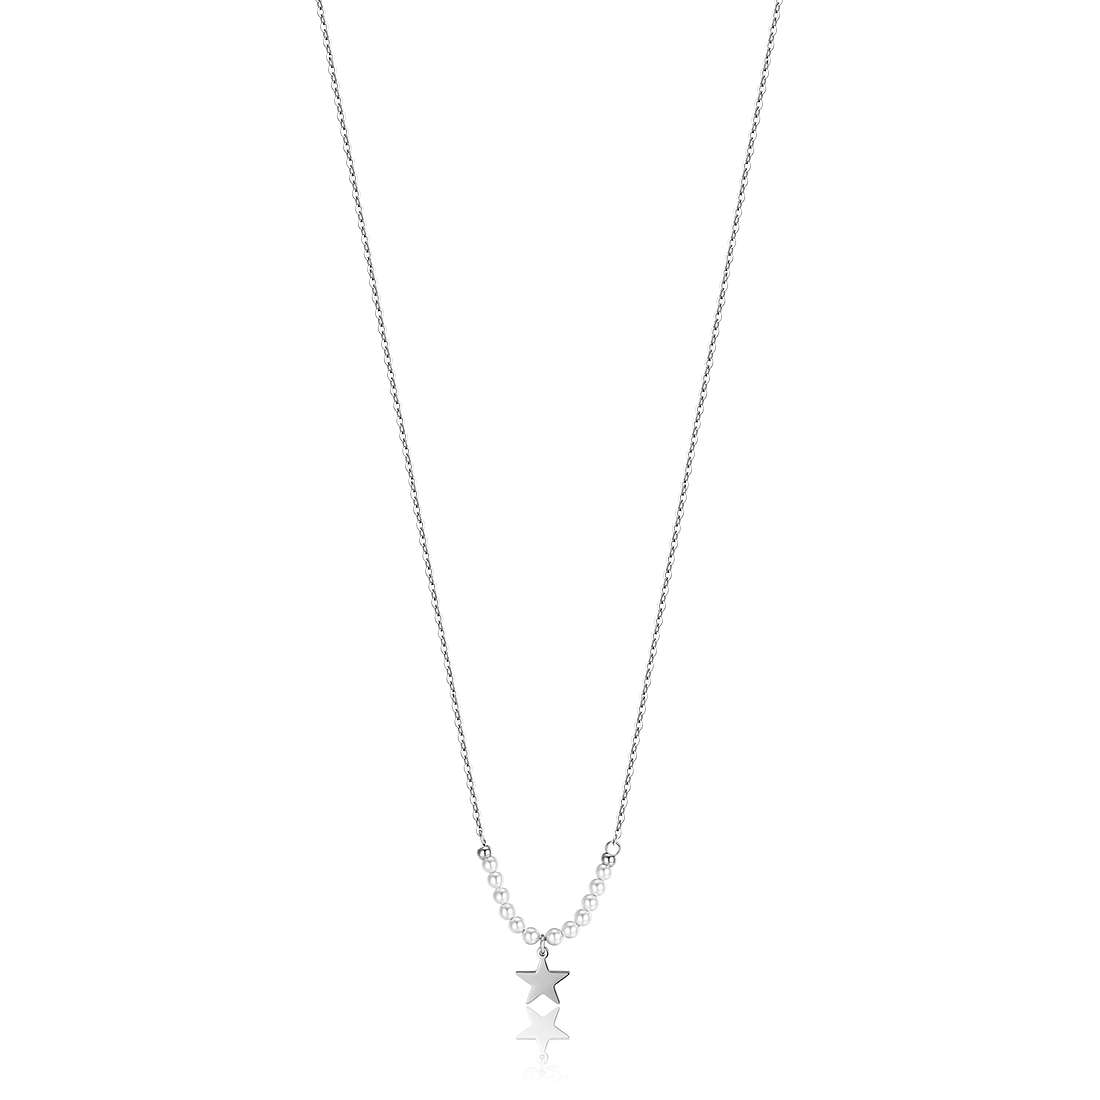 necklace Steel woman jewel Pearls CK1616